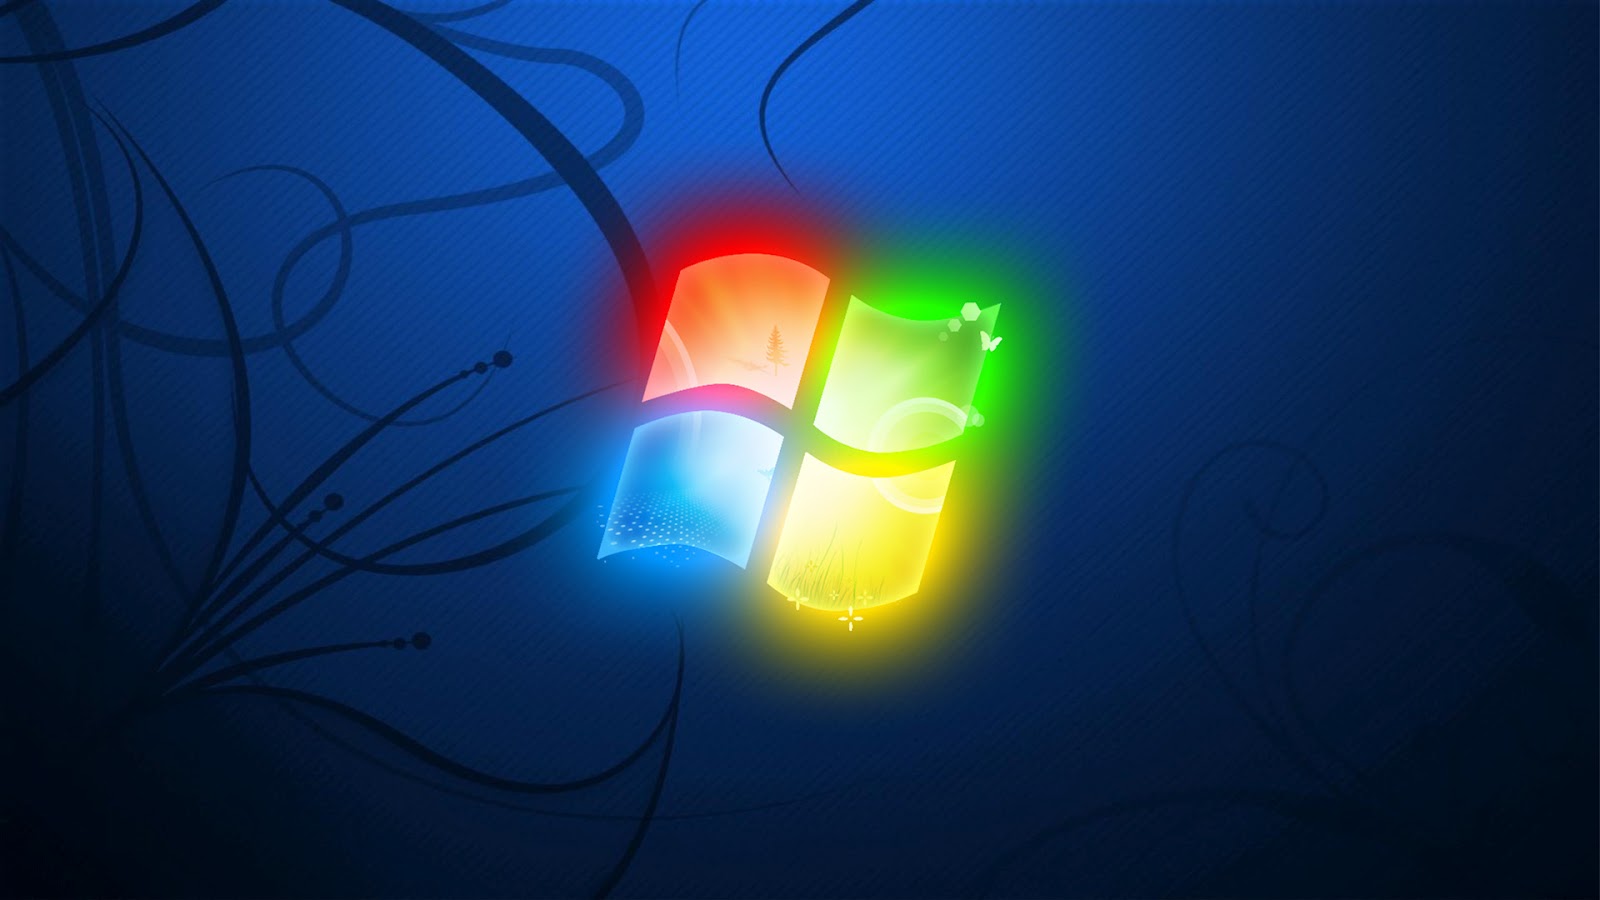 Download windows 10 themes hd